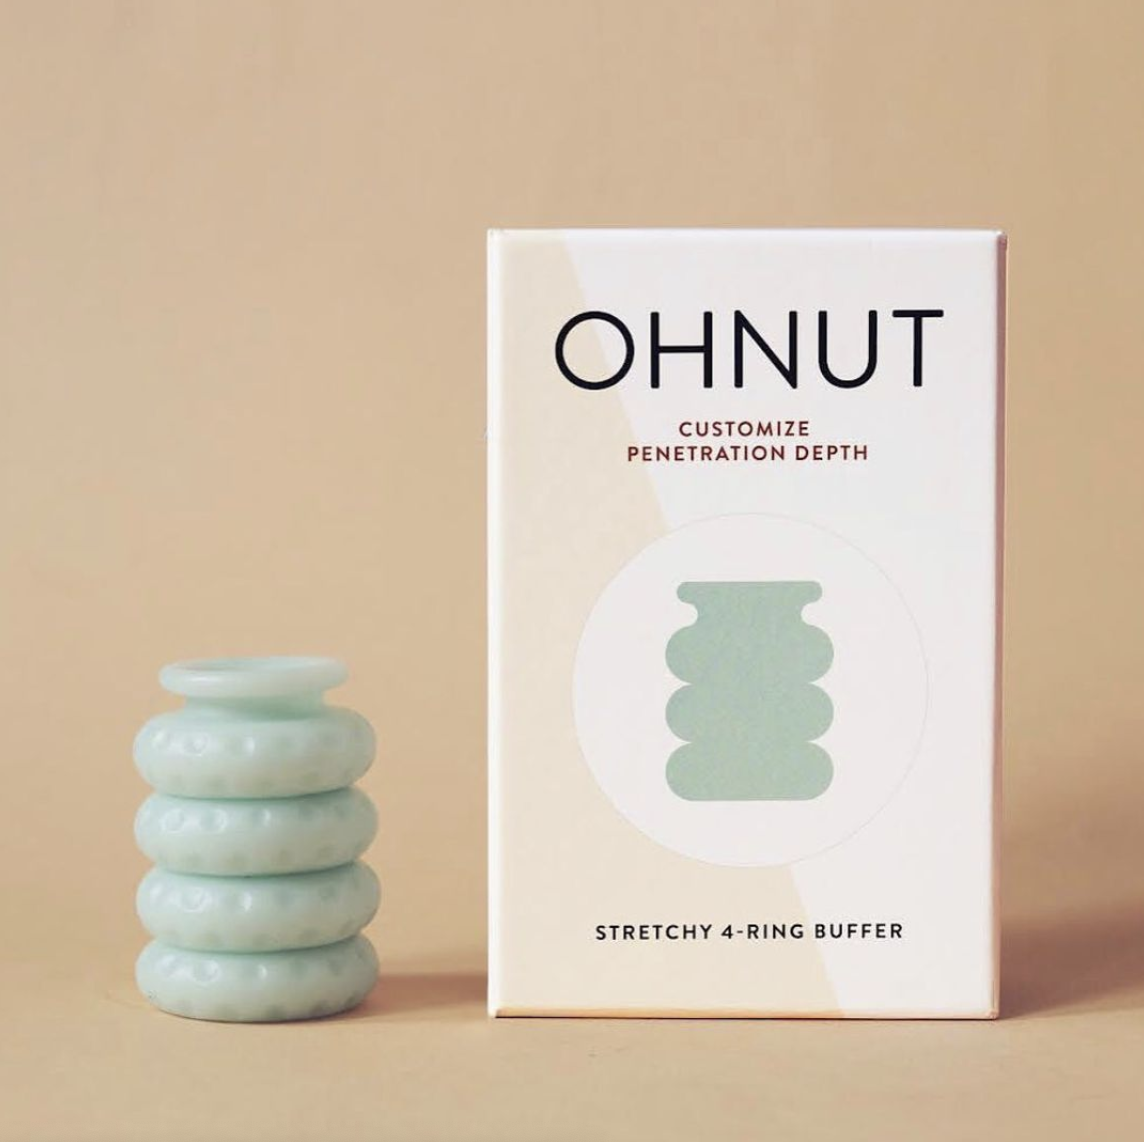 Ohnut, donut rings to custom penetration depth during intercourse.